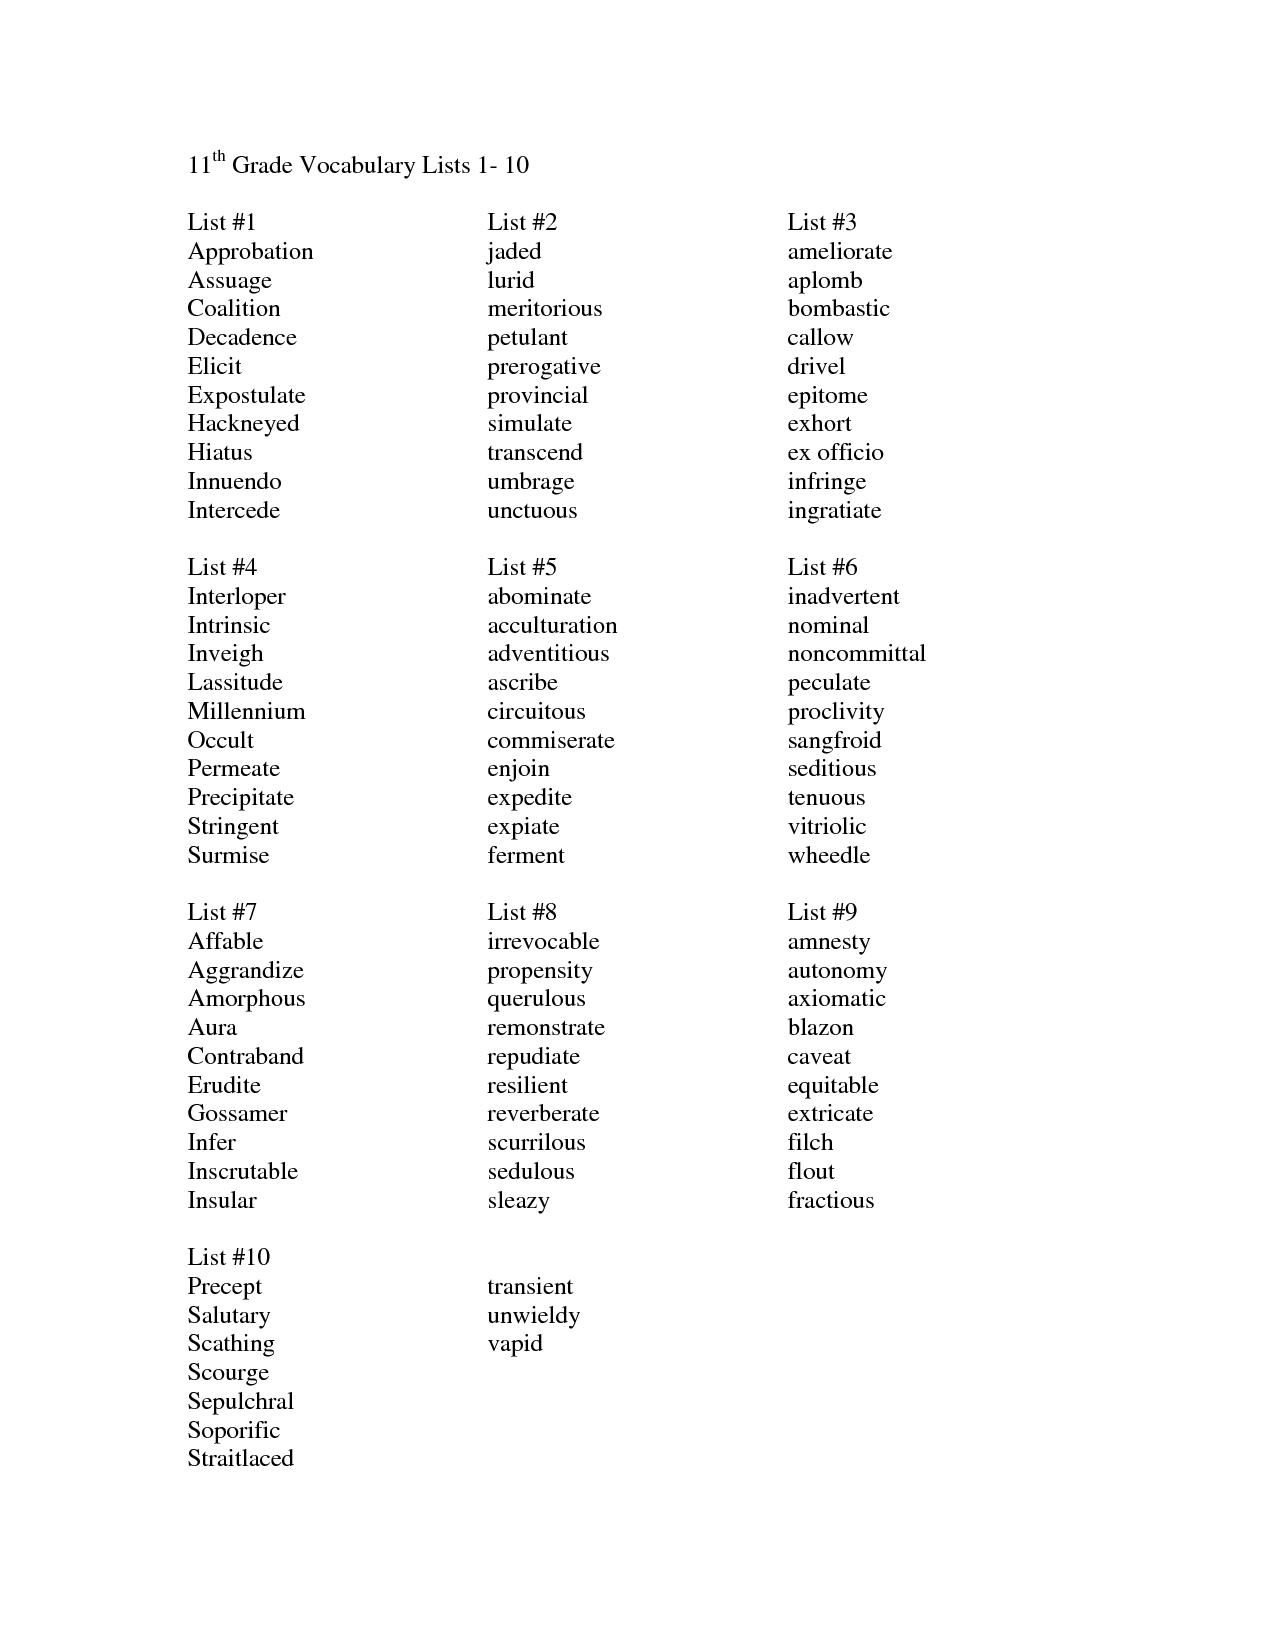 11th Grade Vocabulary Word List